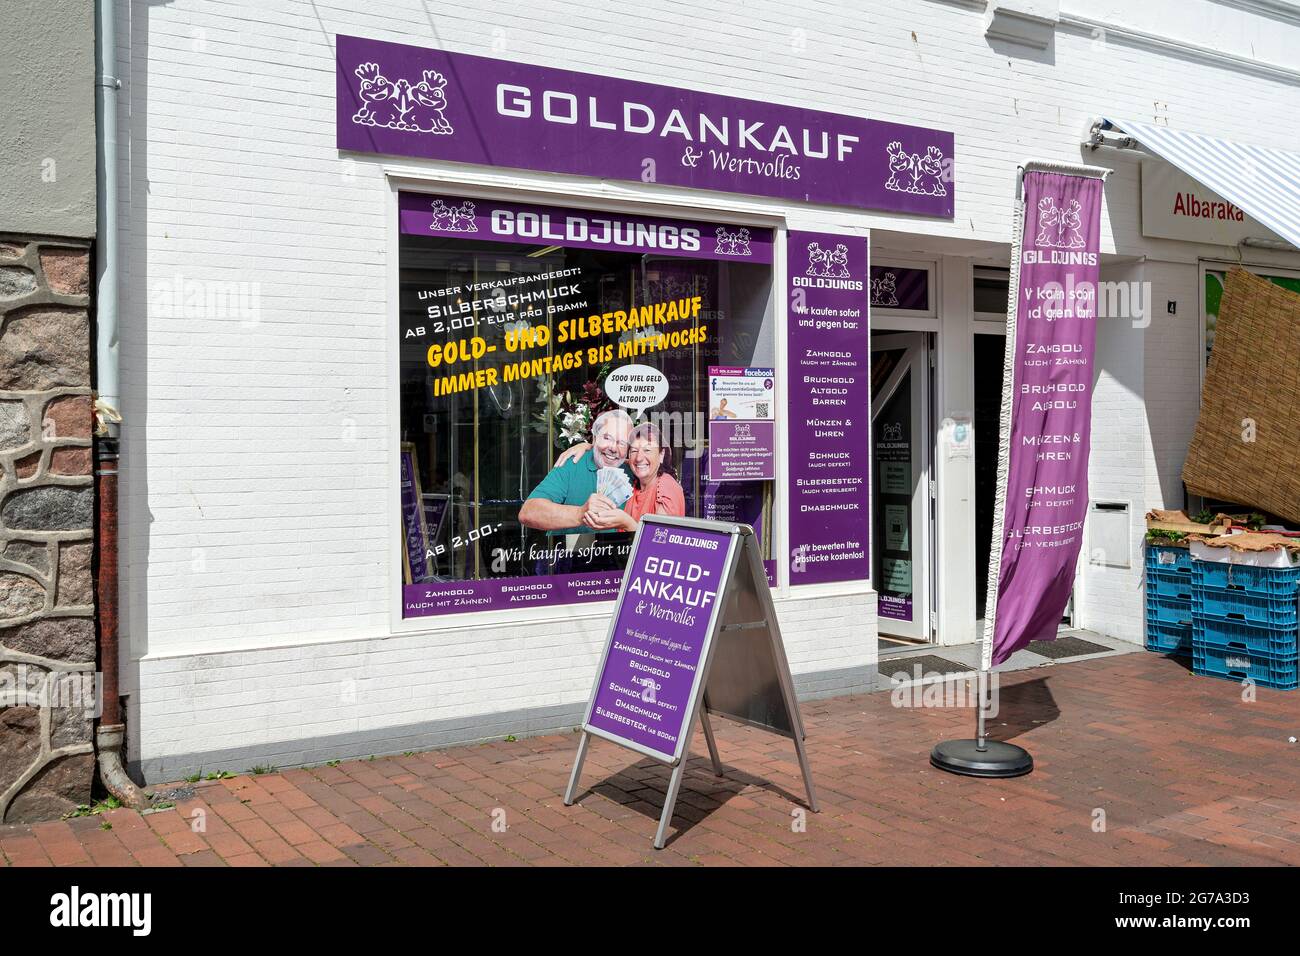 Goldjungs acheteurs d'or au Schleswig, en Allemagne Banque D'Images